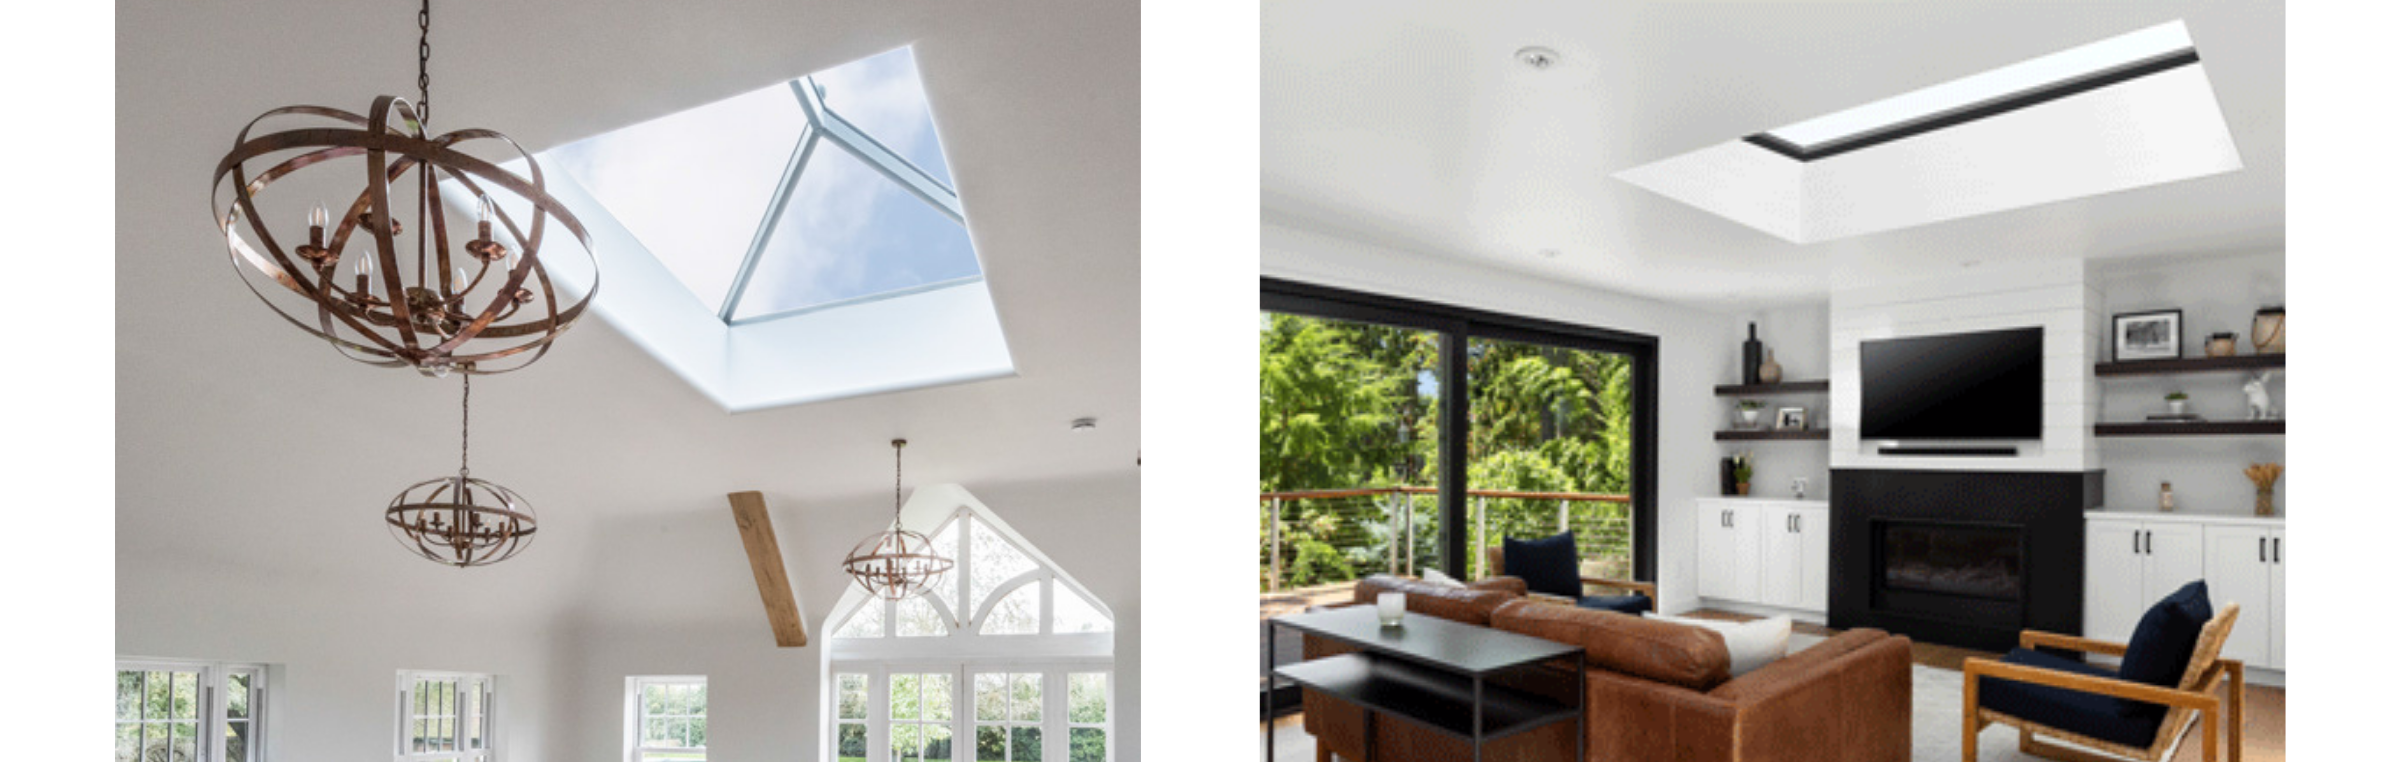 flat roof vs skylight